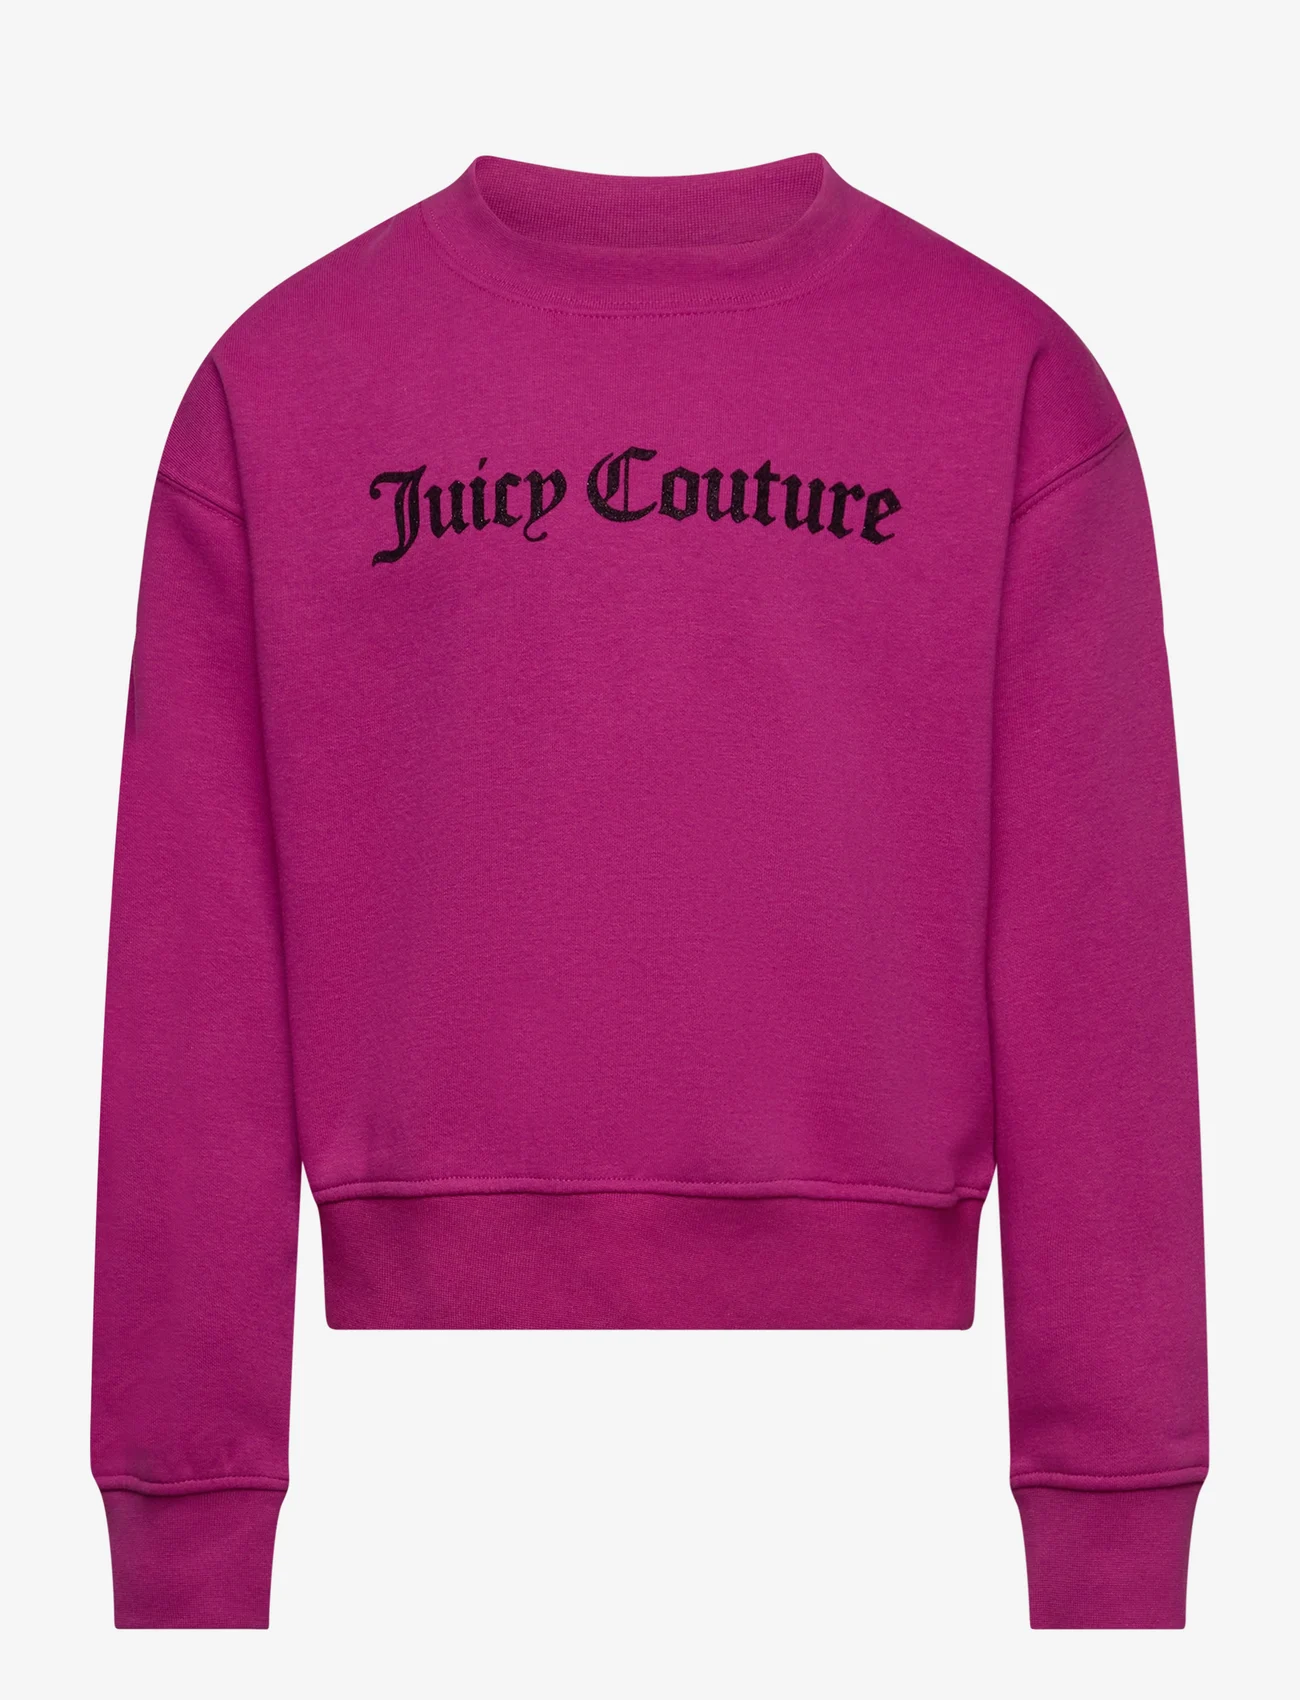 Juicy Couture - Juicy Flocked Balloon Crew - sweatshirts - festival fuchsia - 0